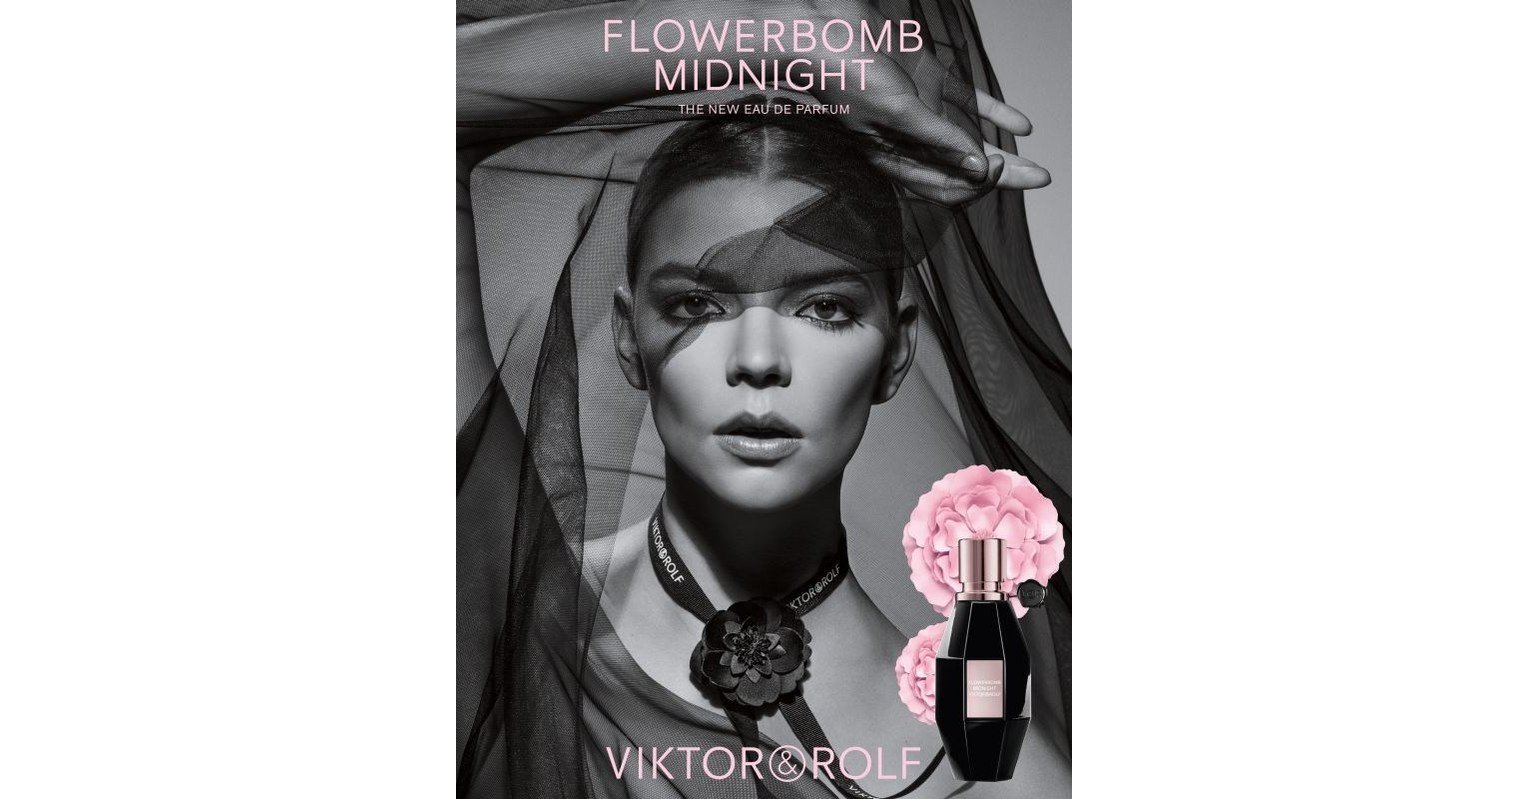 Anya Taylor Joy Is The Face Of Viktor Rolf S New Fragrance Flowerbomb Midnight